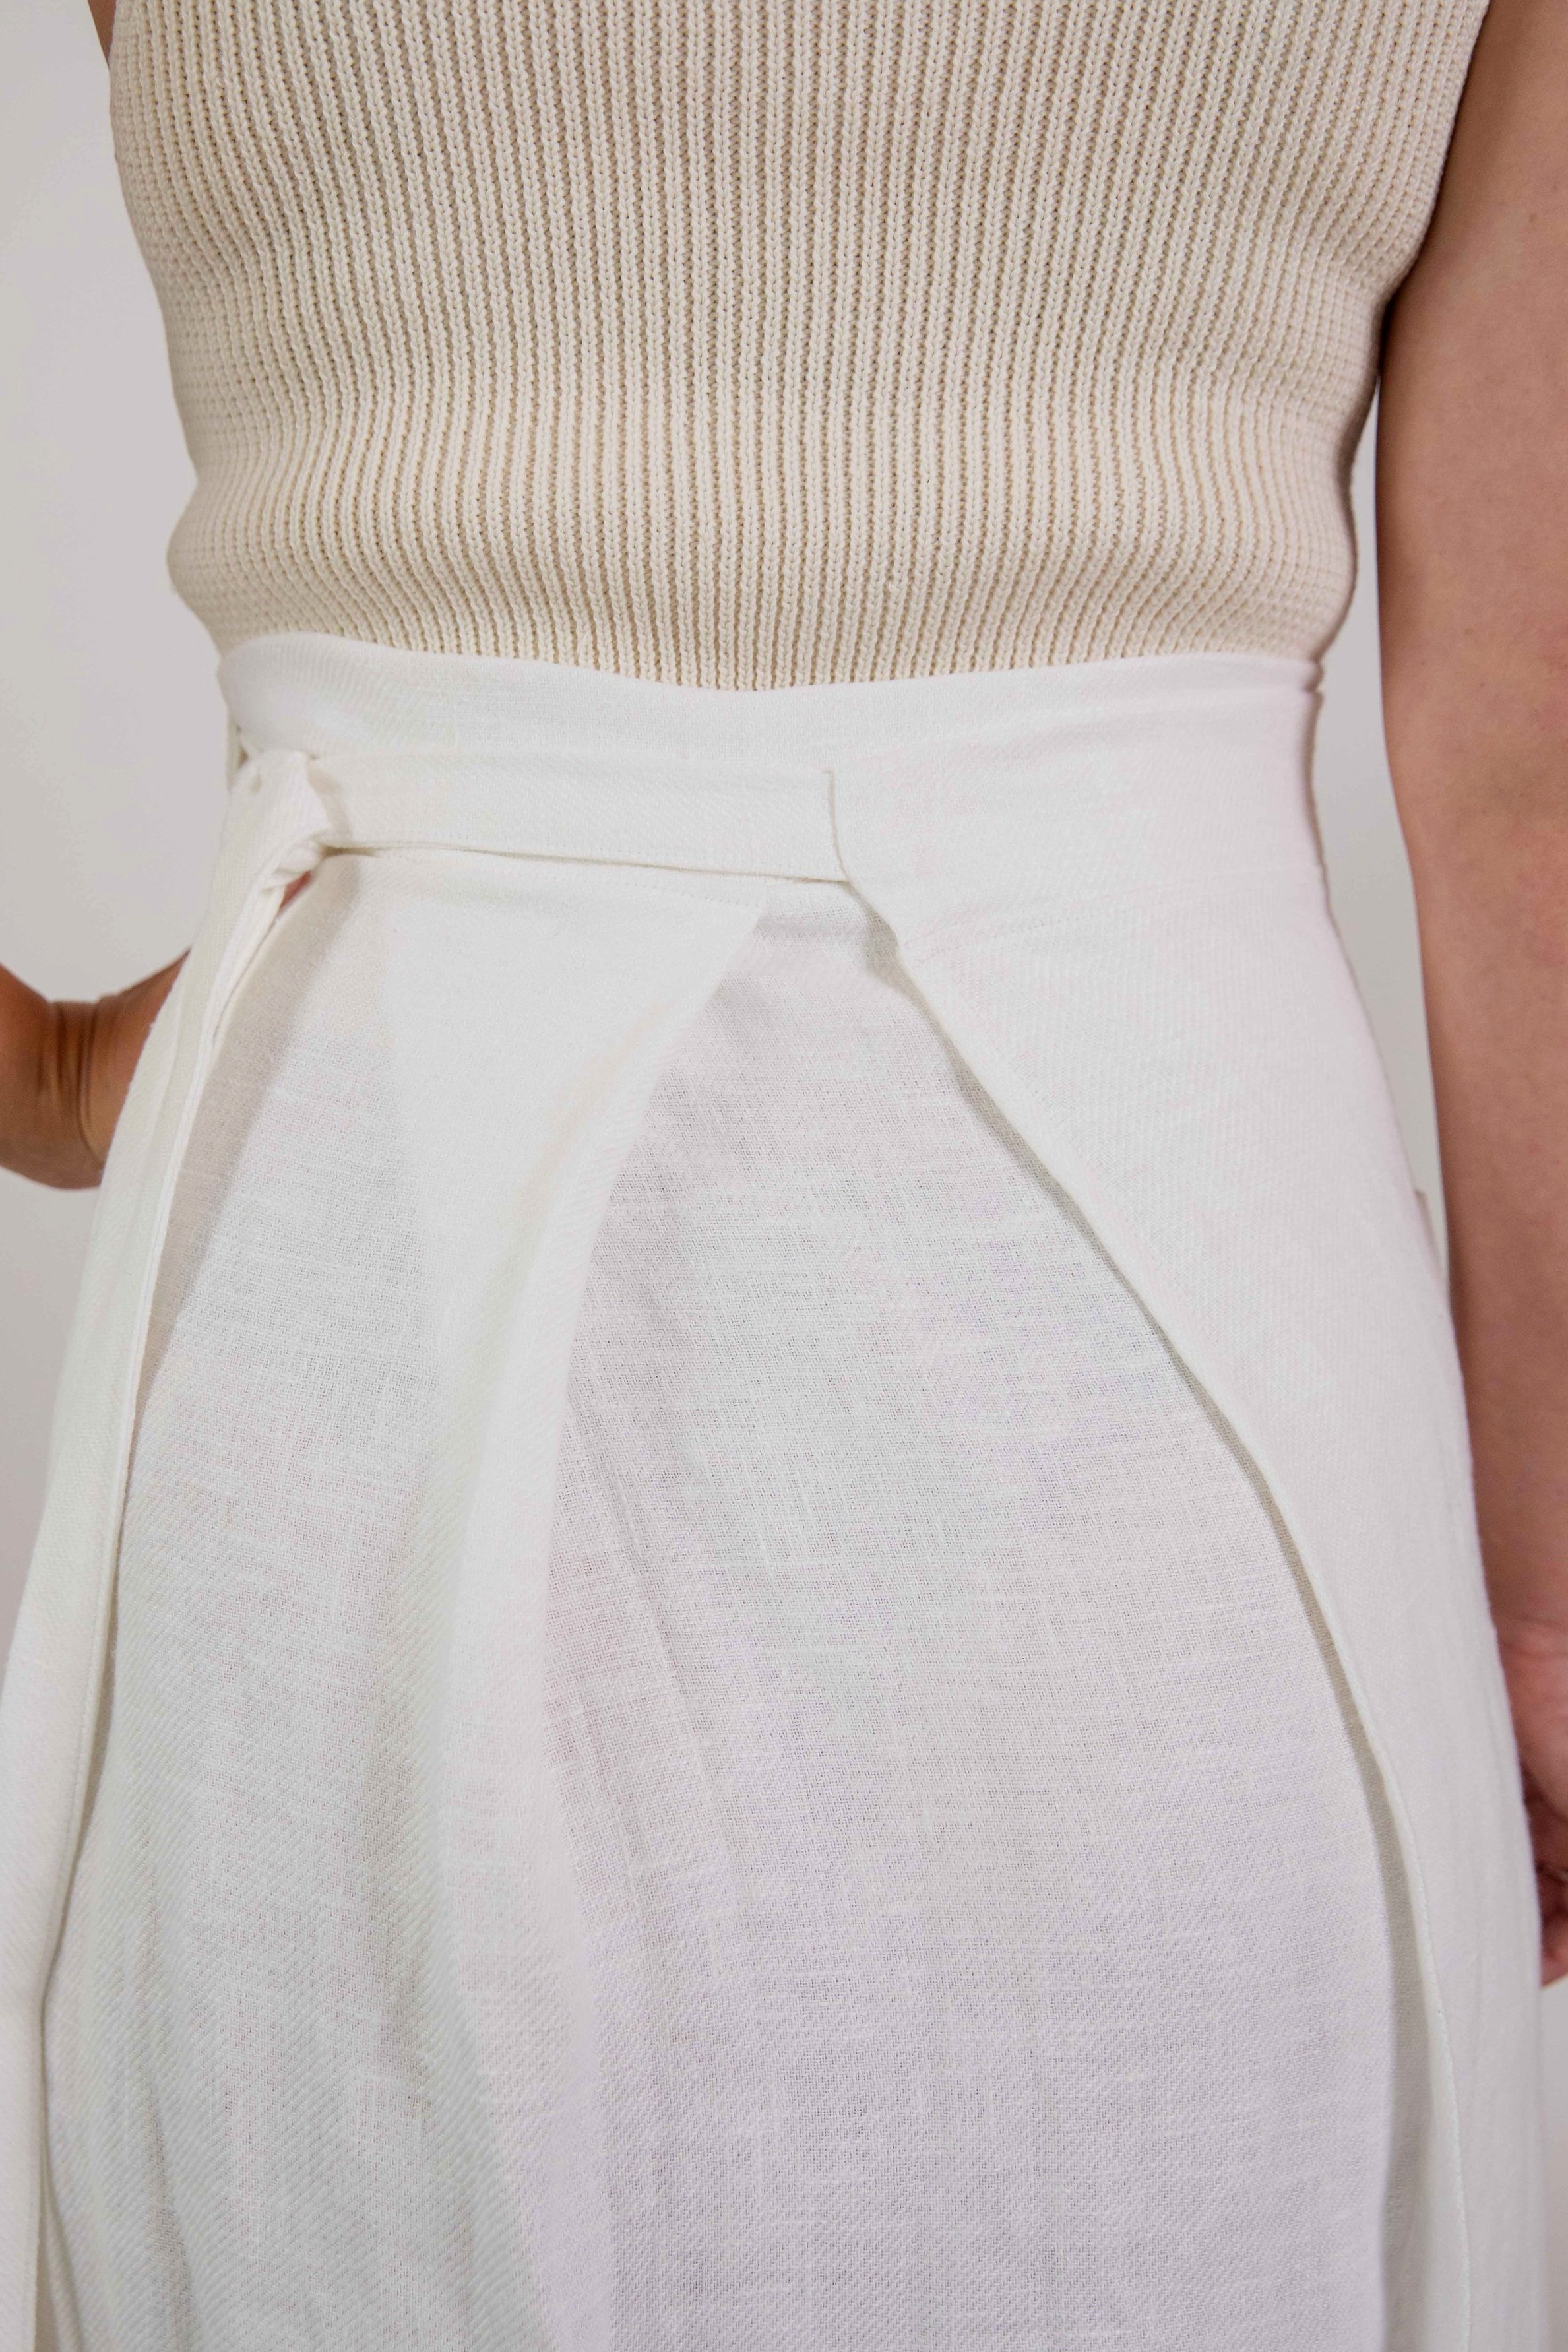 Linen Skirt, Wrap Skirt | Rumi Wrap Skirt | Linen Clothing — Nomi Designs